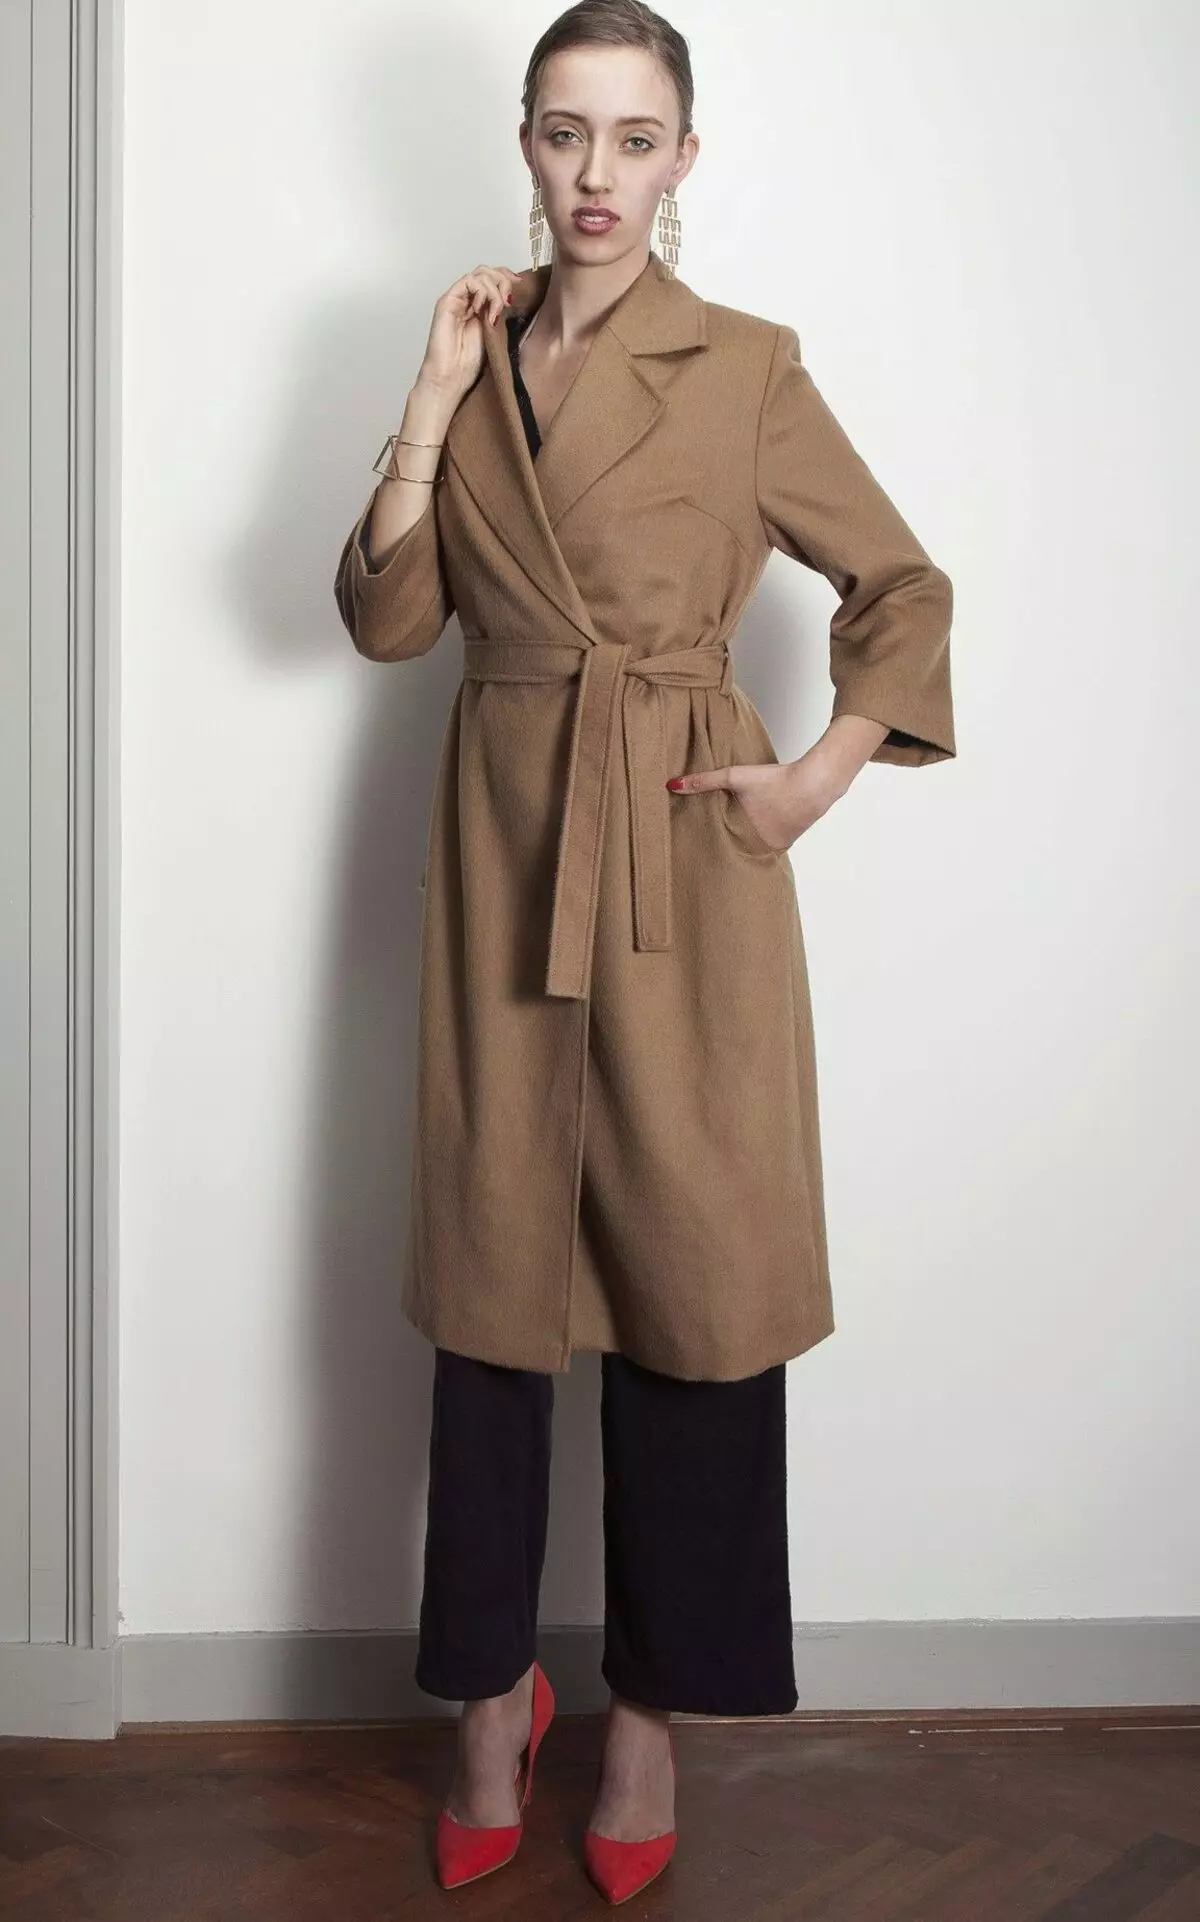 Модни летњи капут 2021 (148 фотографија): ЈацКуард, Лигхт, стилски модели 2021, памук и лане, у стилу Боха, без овратника 629_33